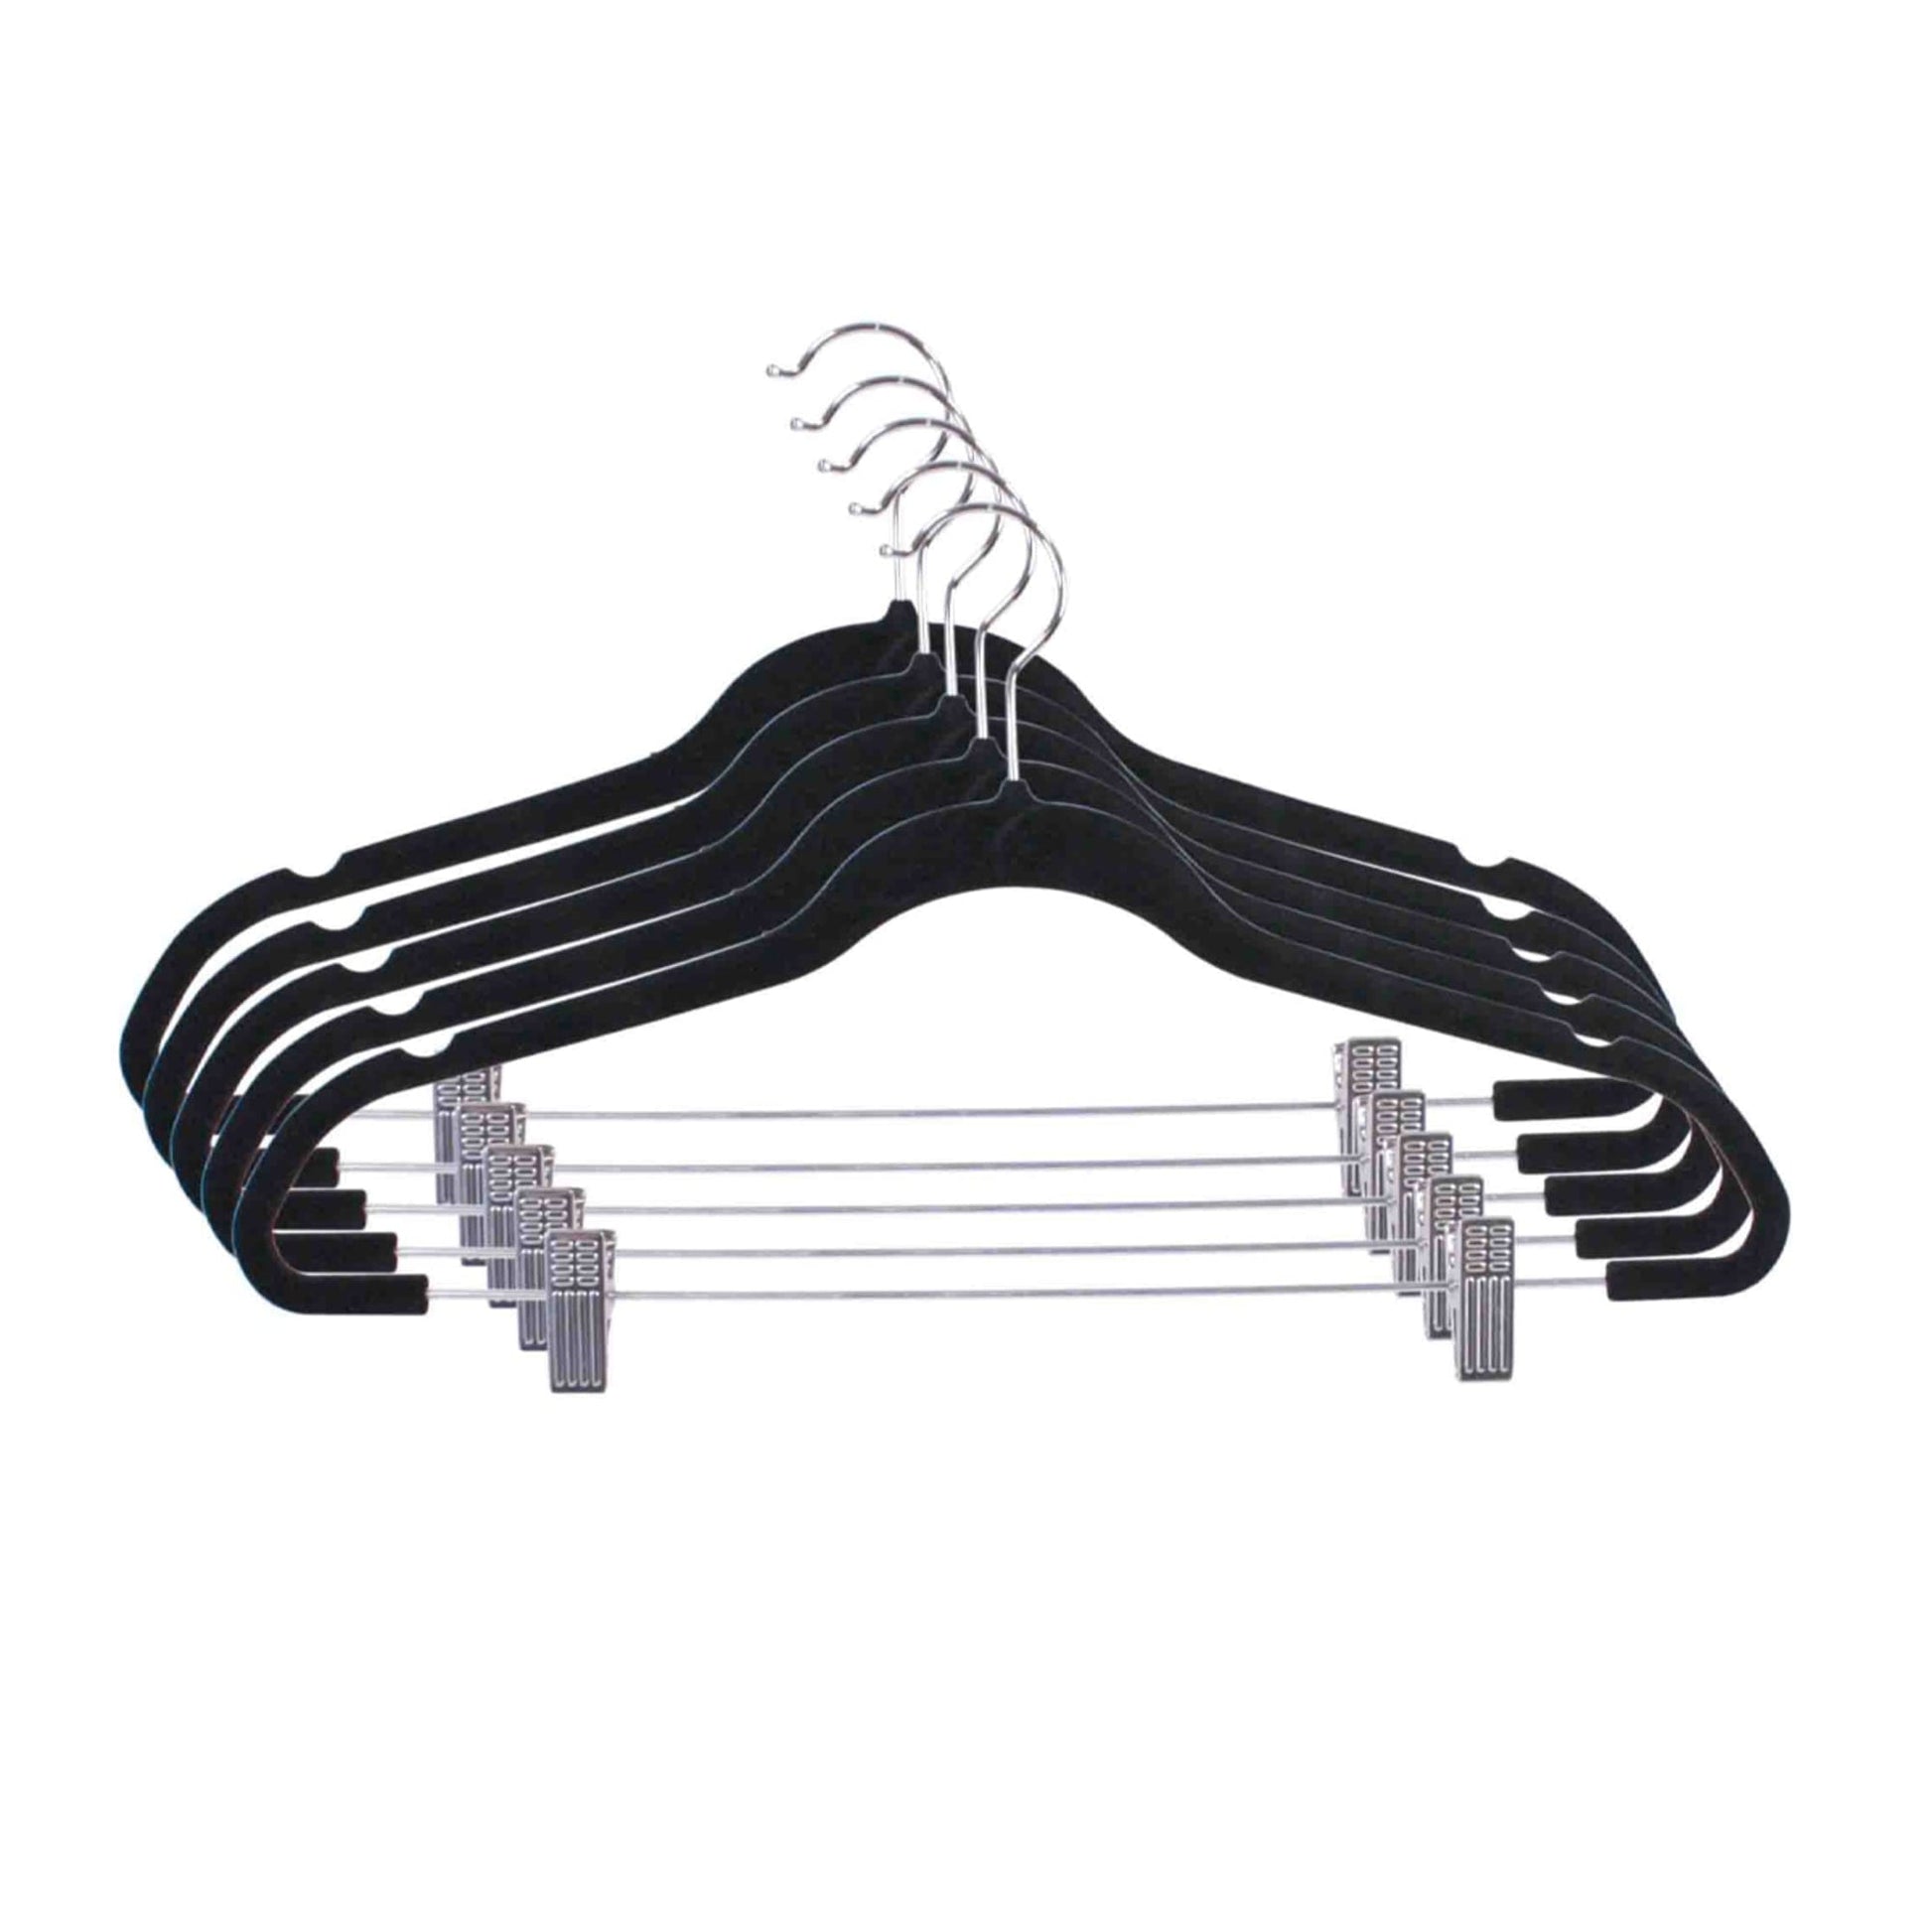 5 PCS Dry Clothes Hanging Rack Black Adult Clothing Hanger Plastic Hangers  Household Clothes Dress Organizer